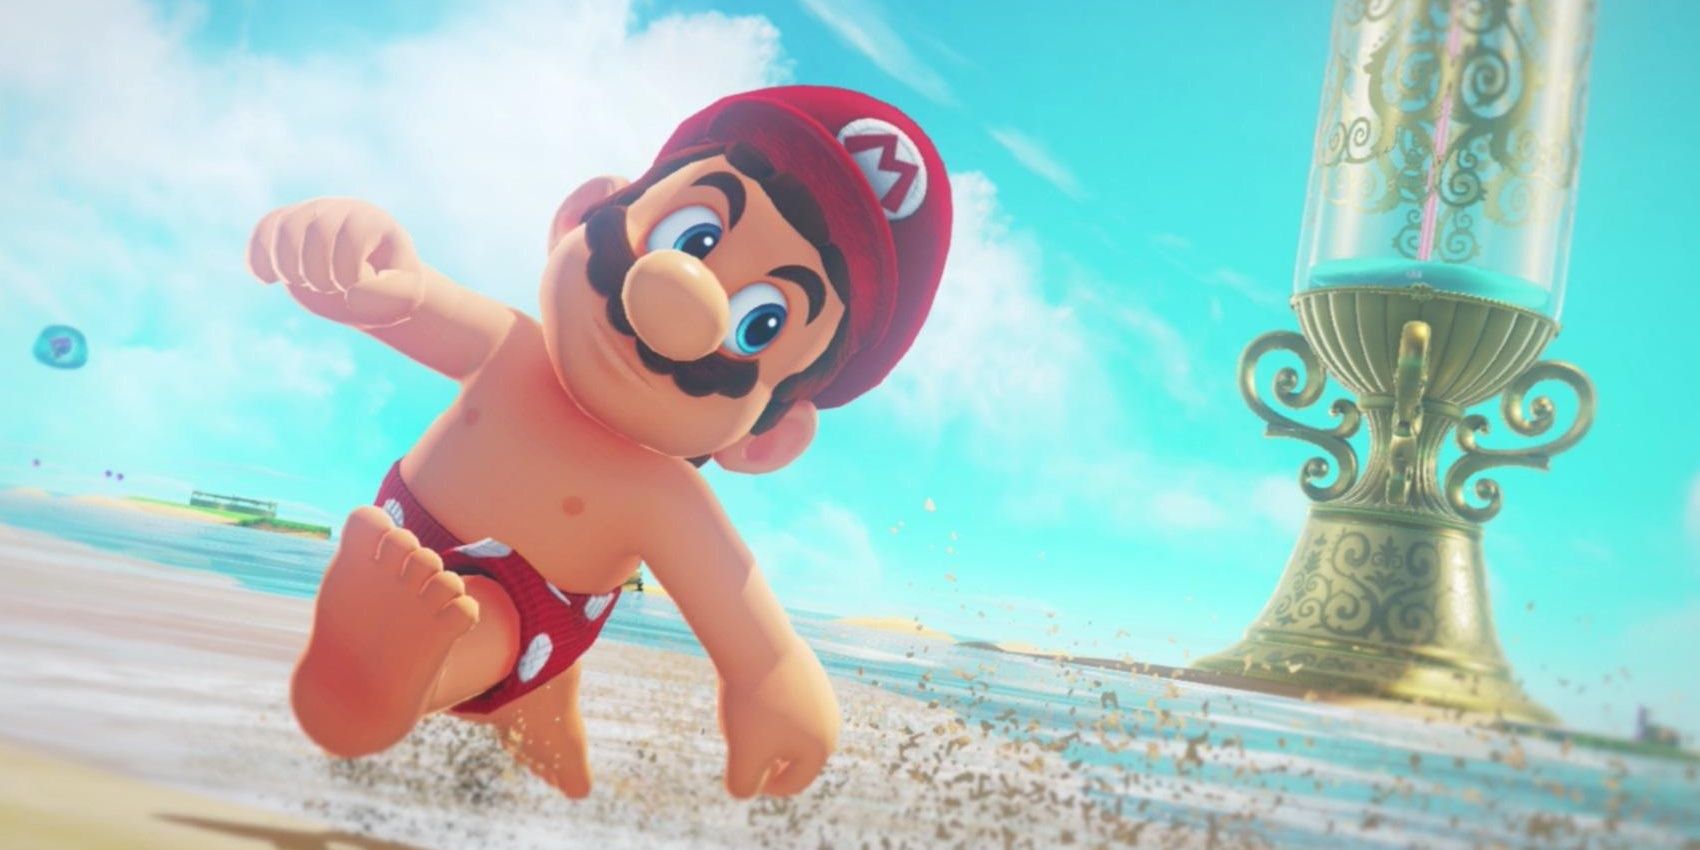 A screenshot showing Mario running on a beach in Super Mario Odyssey